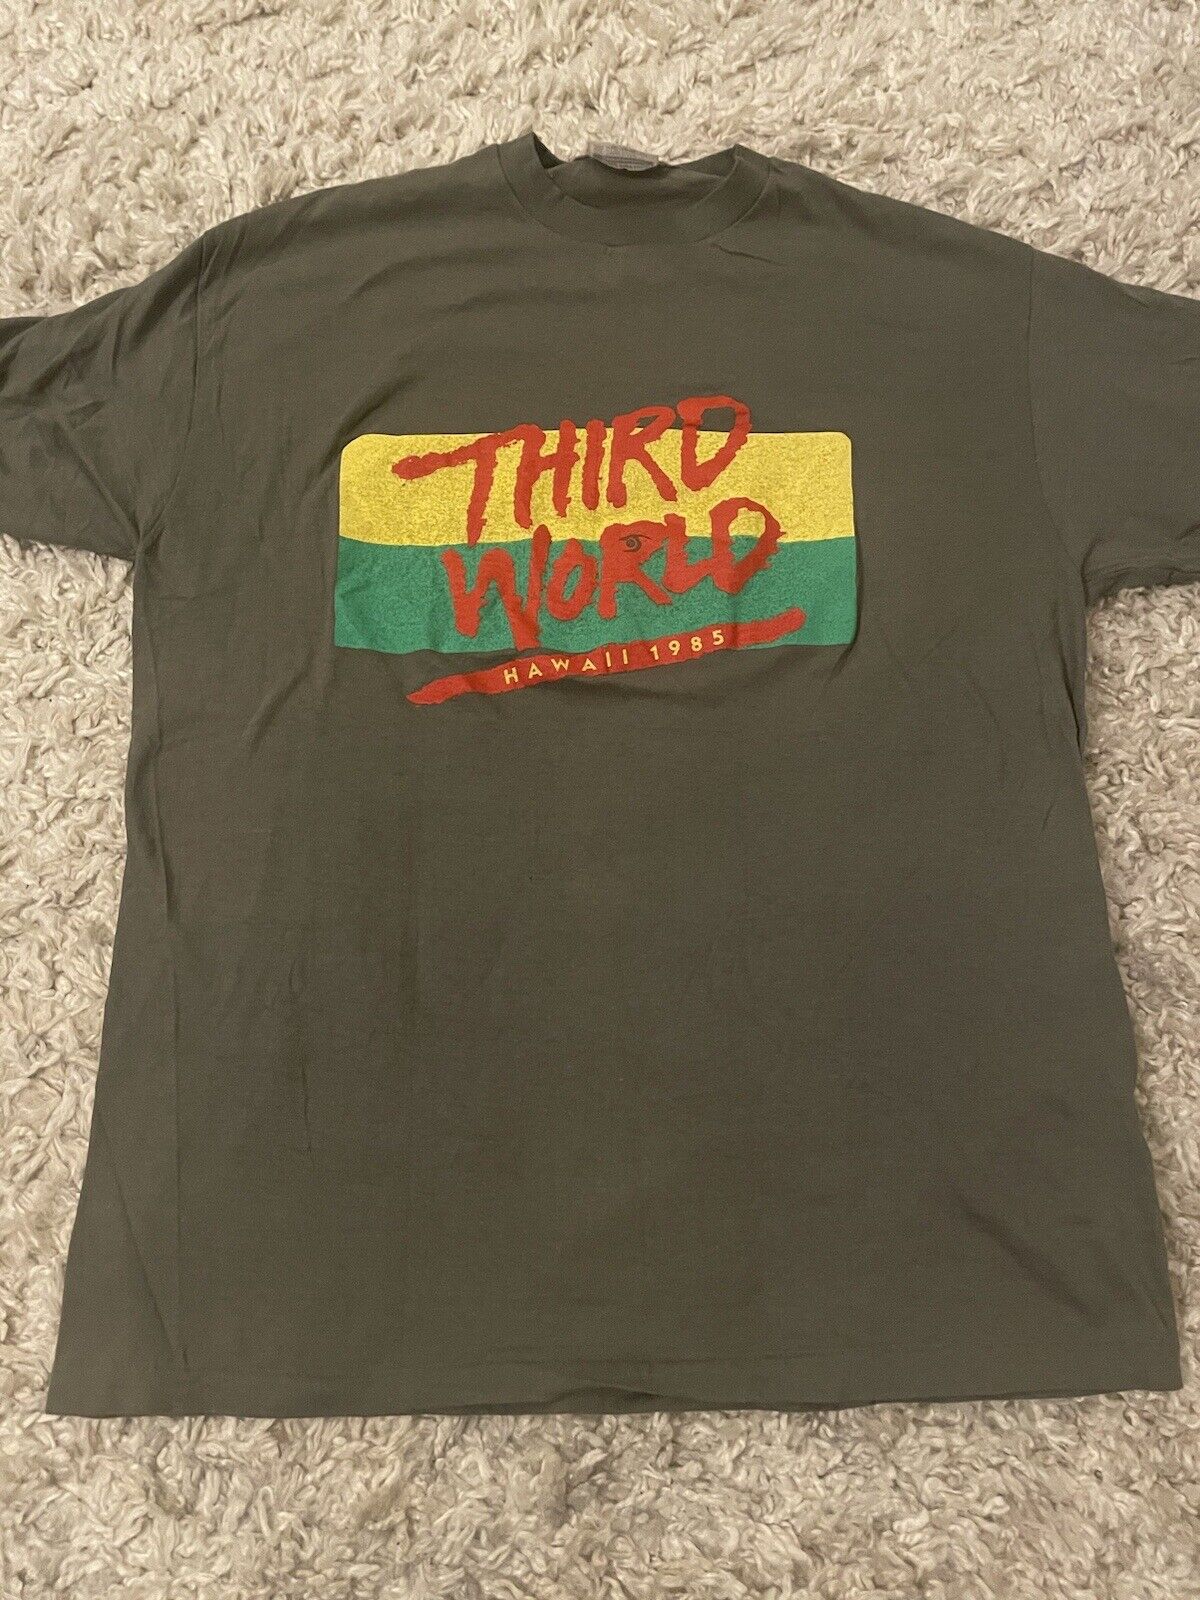 Vintage 1985 Third World Tour Shirt Size XL Rare Hawaii Raggae Single Stitch